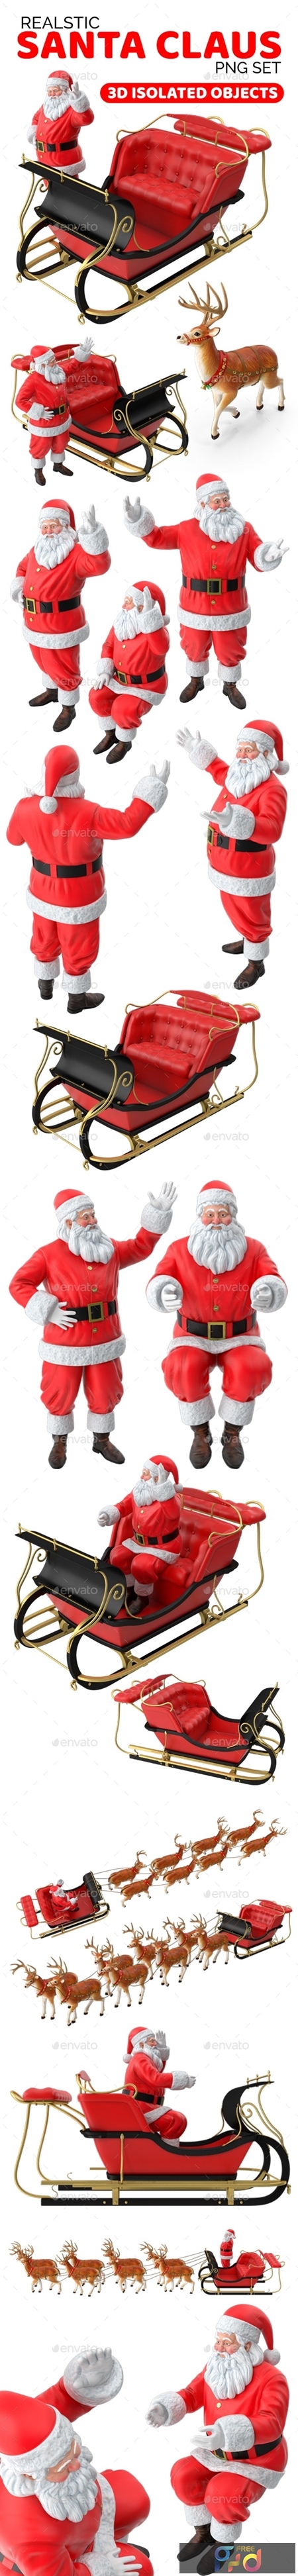 3D Realistic Santa Claus Pack 22856255 1